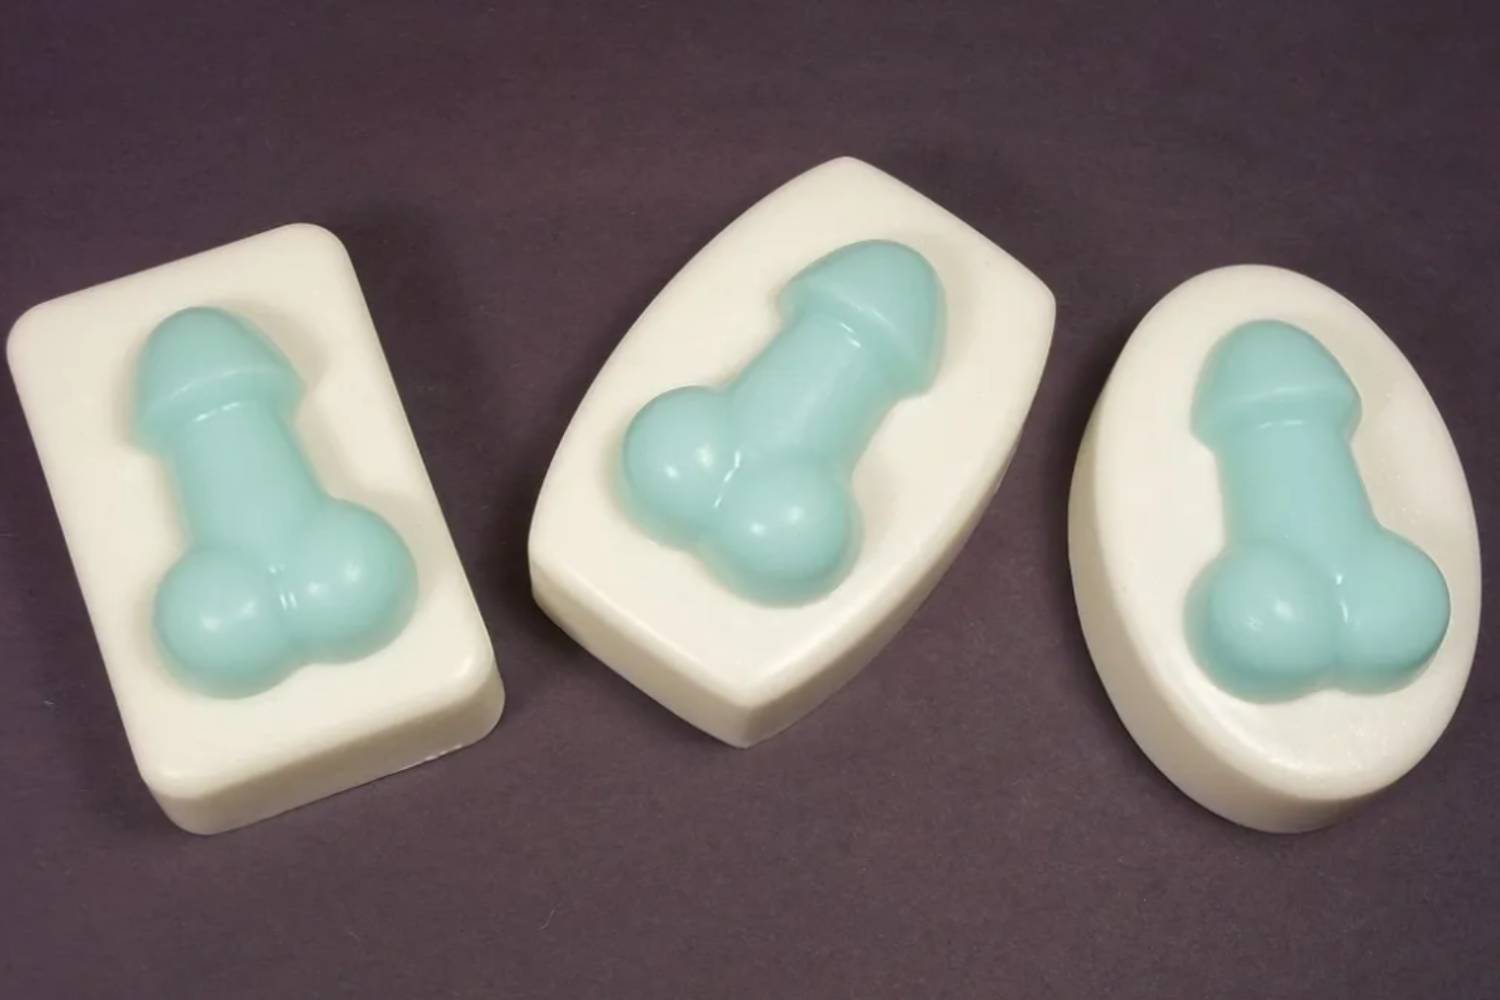 Three soap bars with a blue bone on them.